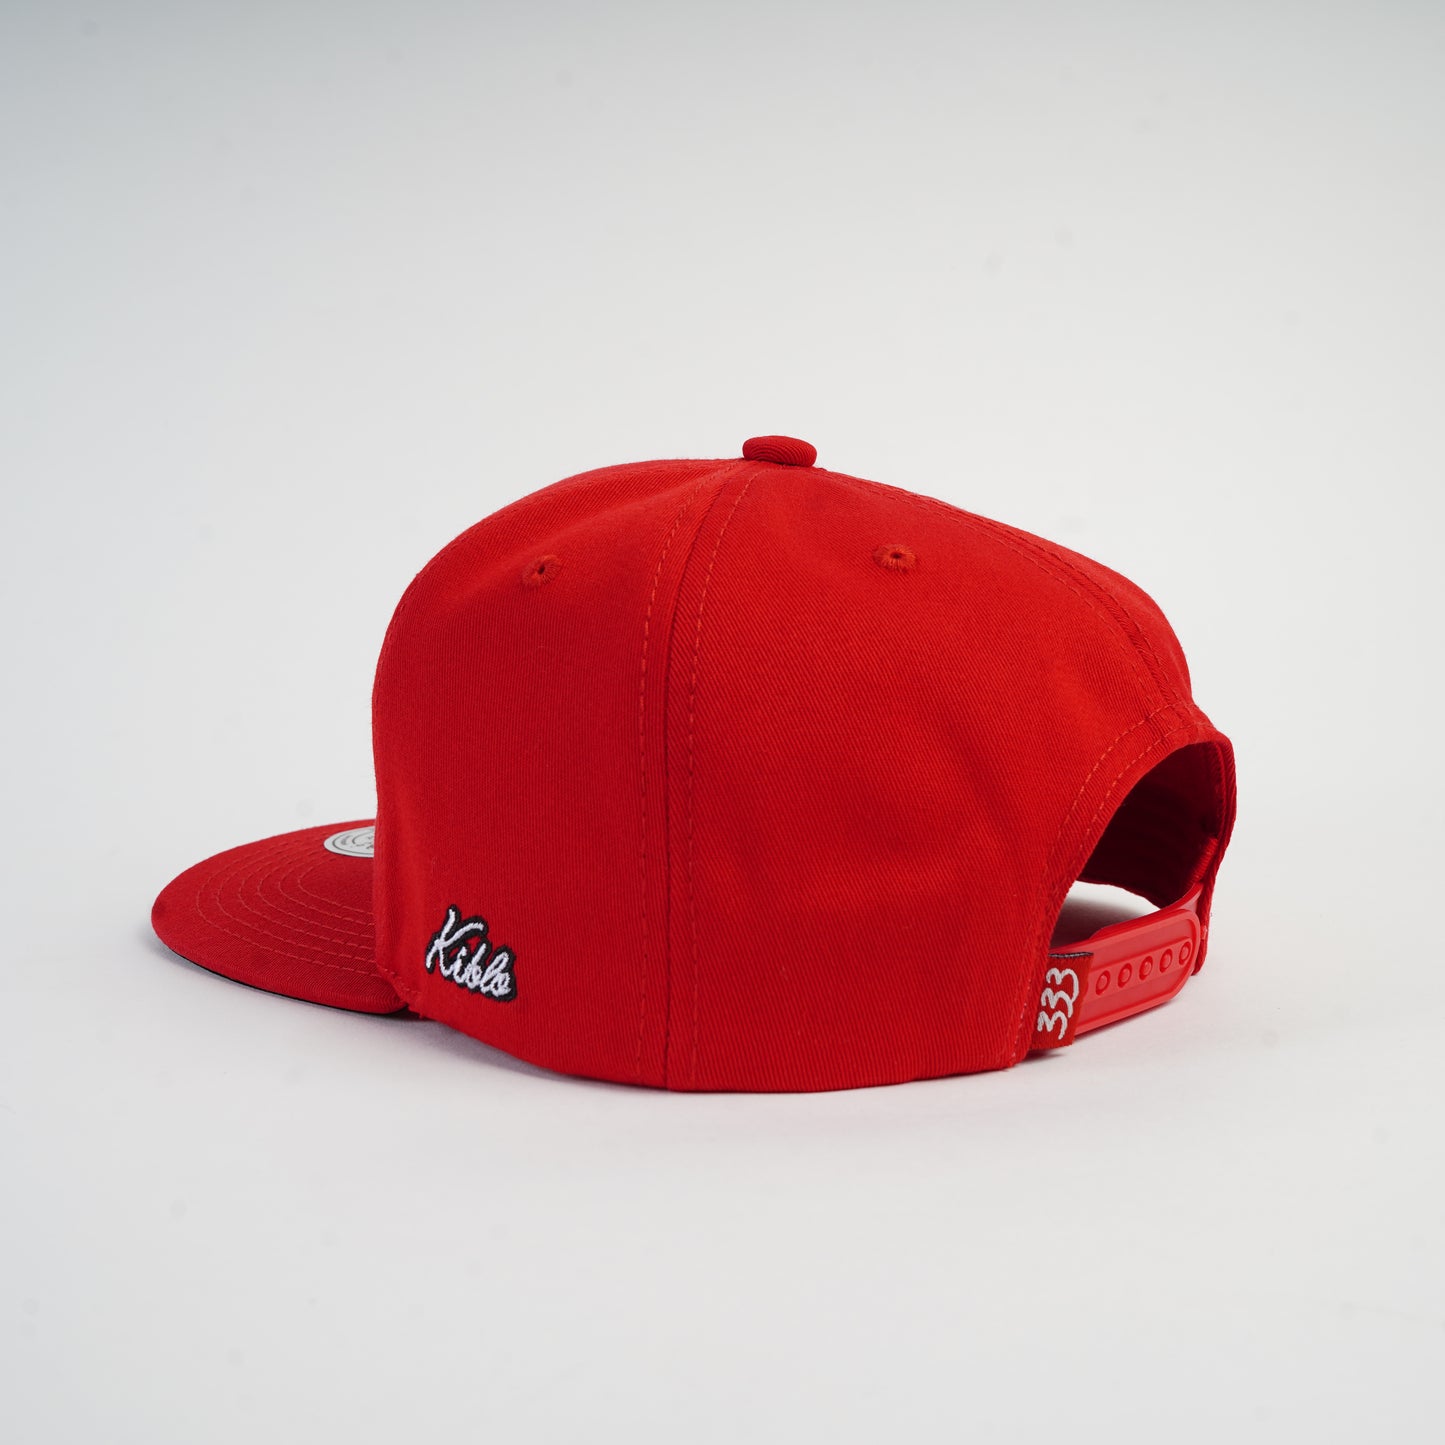 Xolos - Red Cap